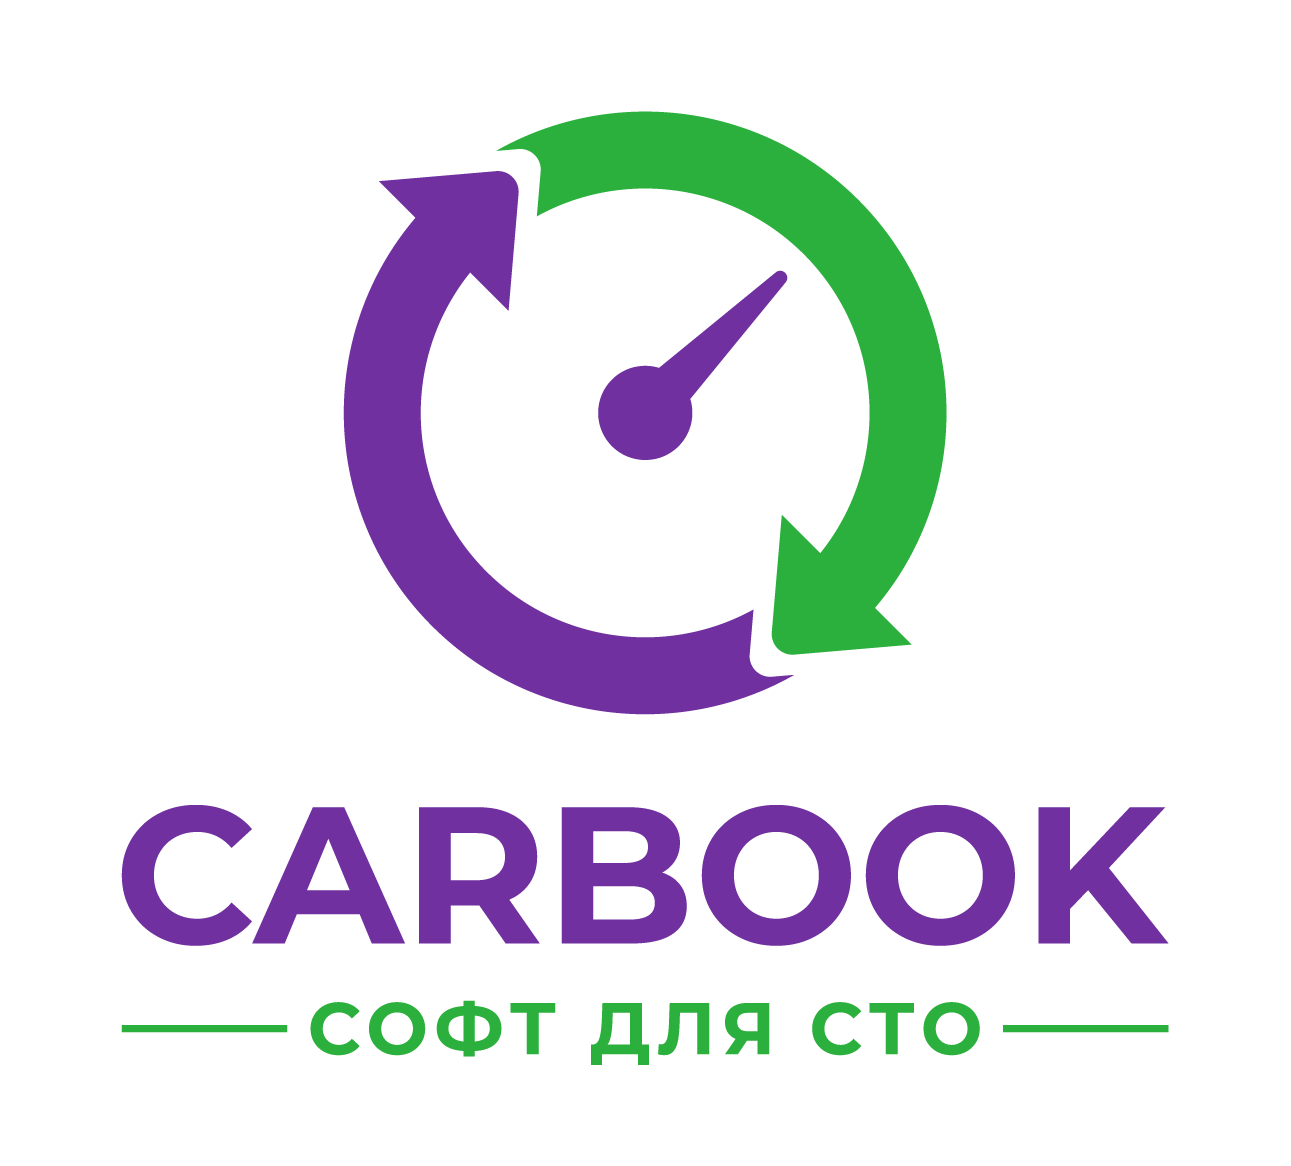 CARBOOK